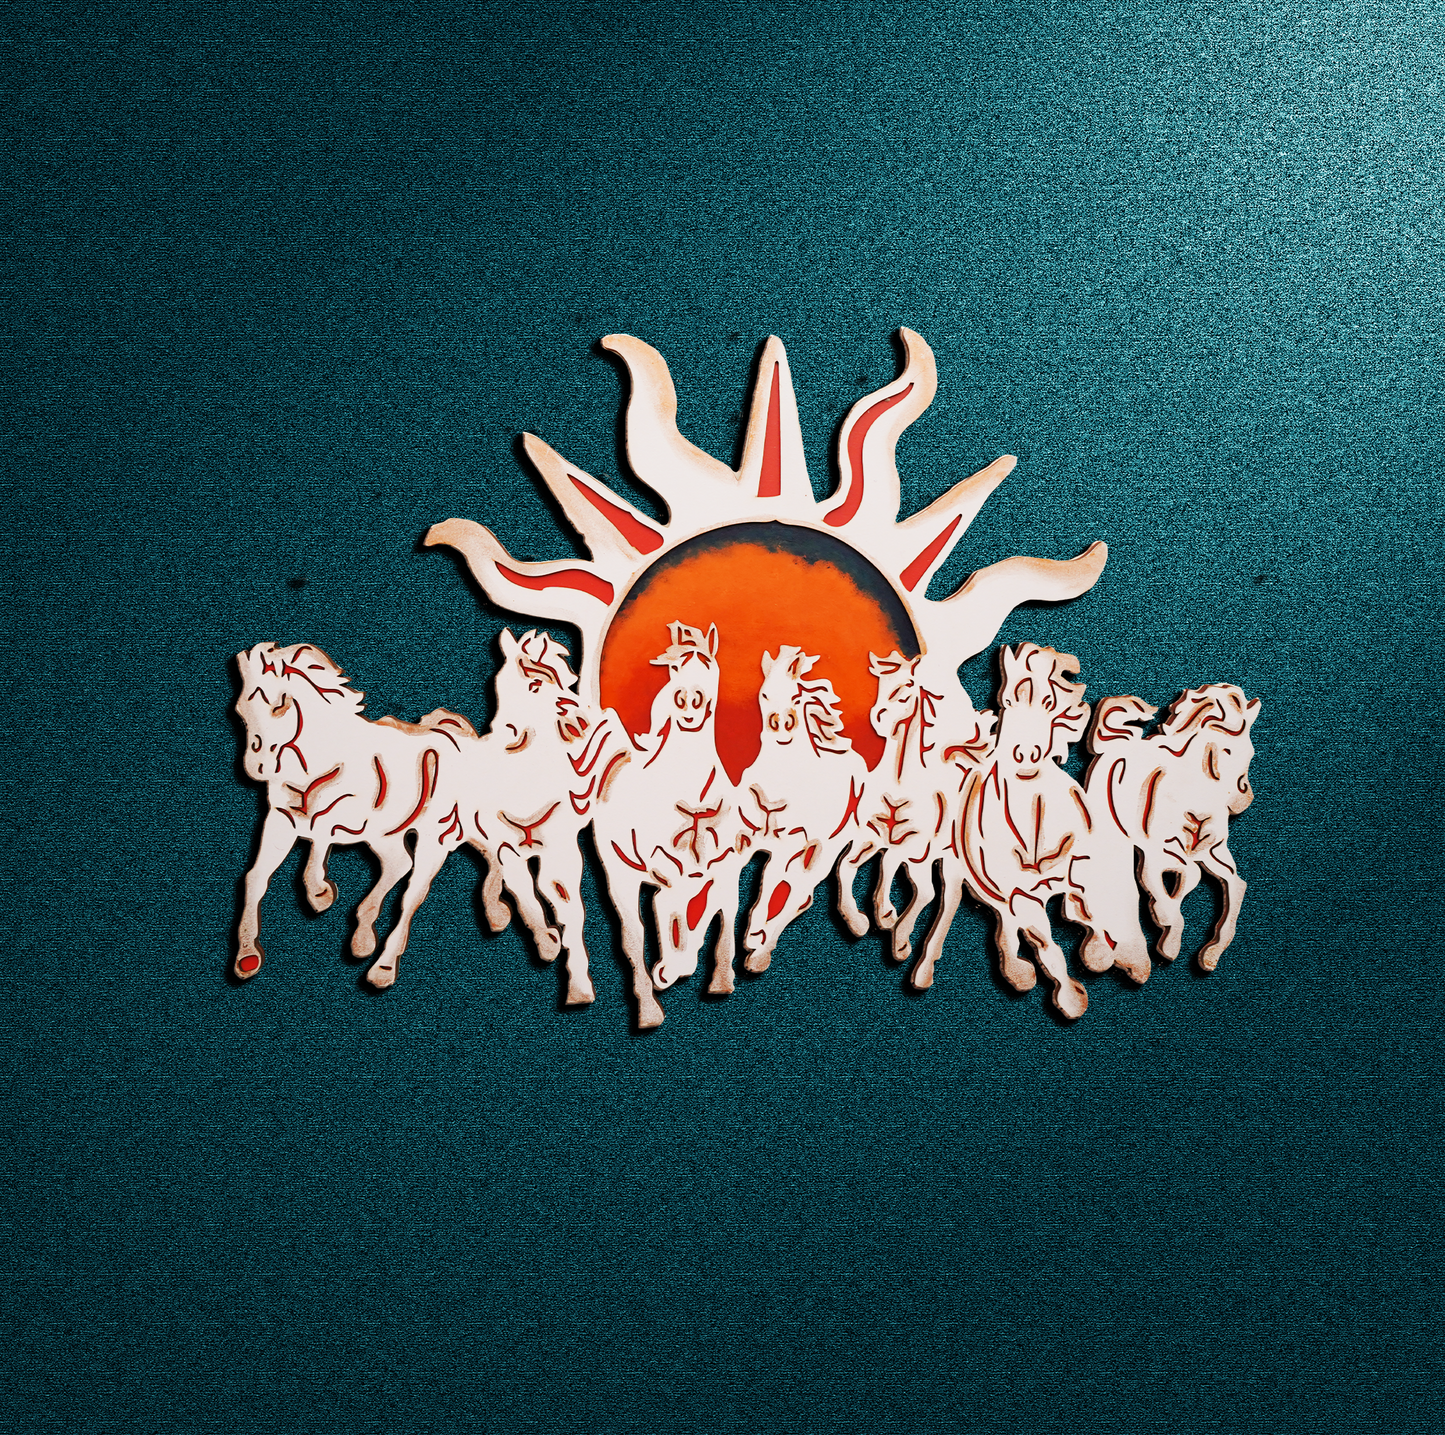 7 Horses With Rising Sun Vaastu Wall Art in Ivory and Orange